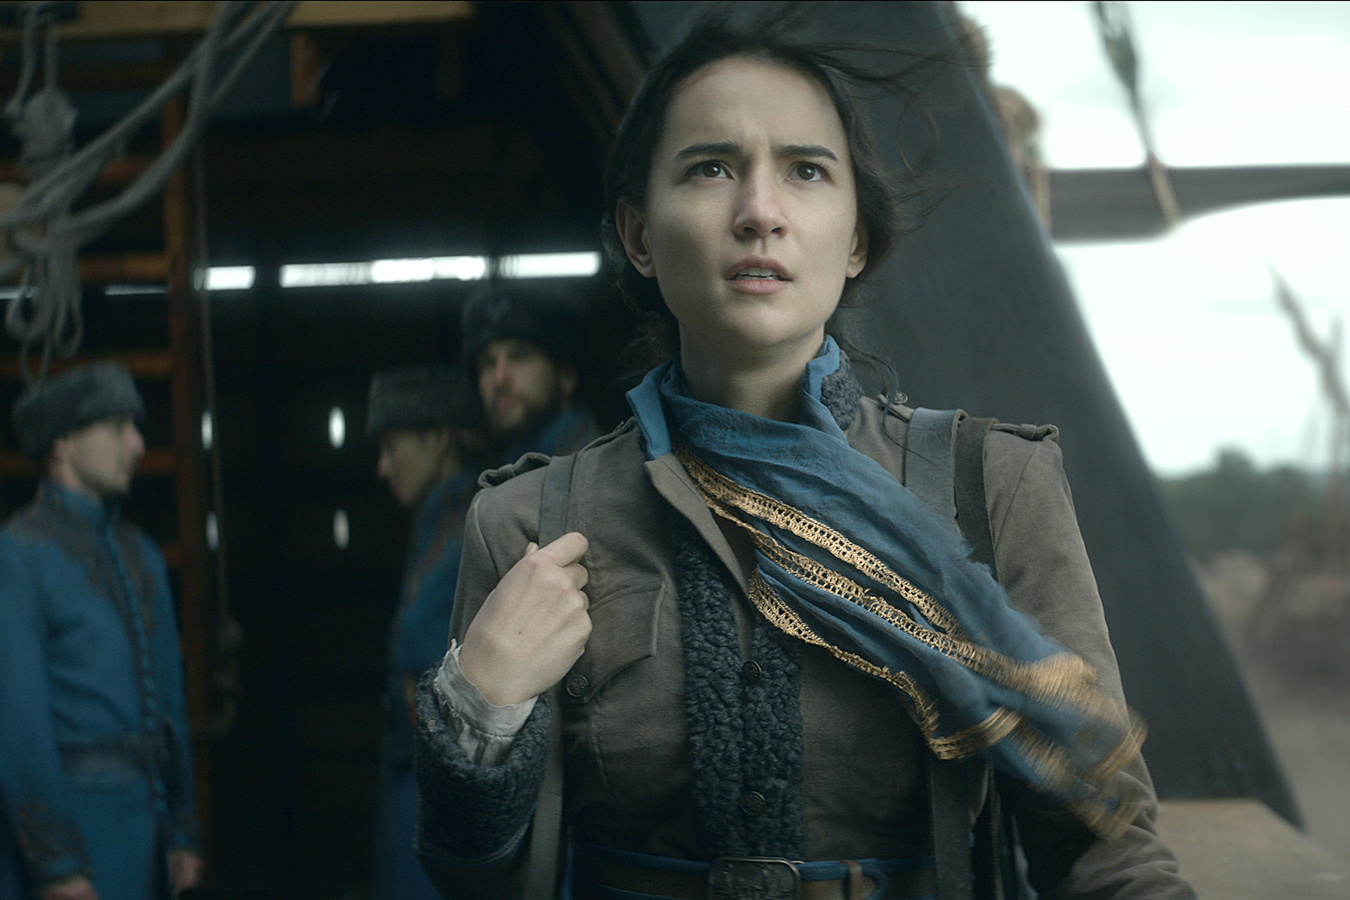 Jessie Mei Li Brings a New Take on Alina to Netflix's 'Shadow and Bone'